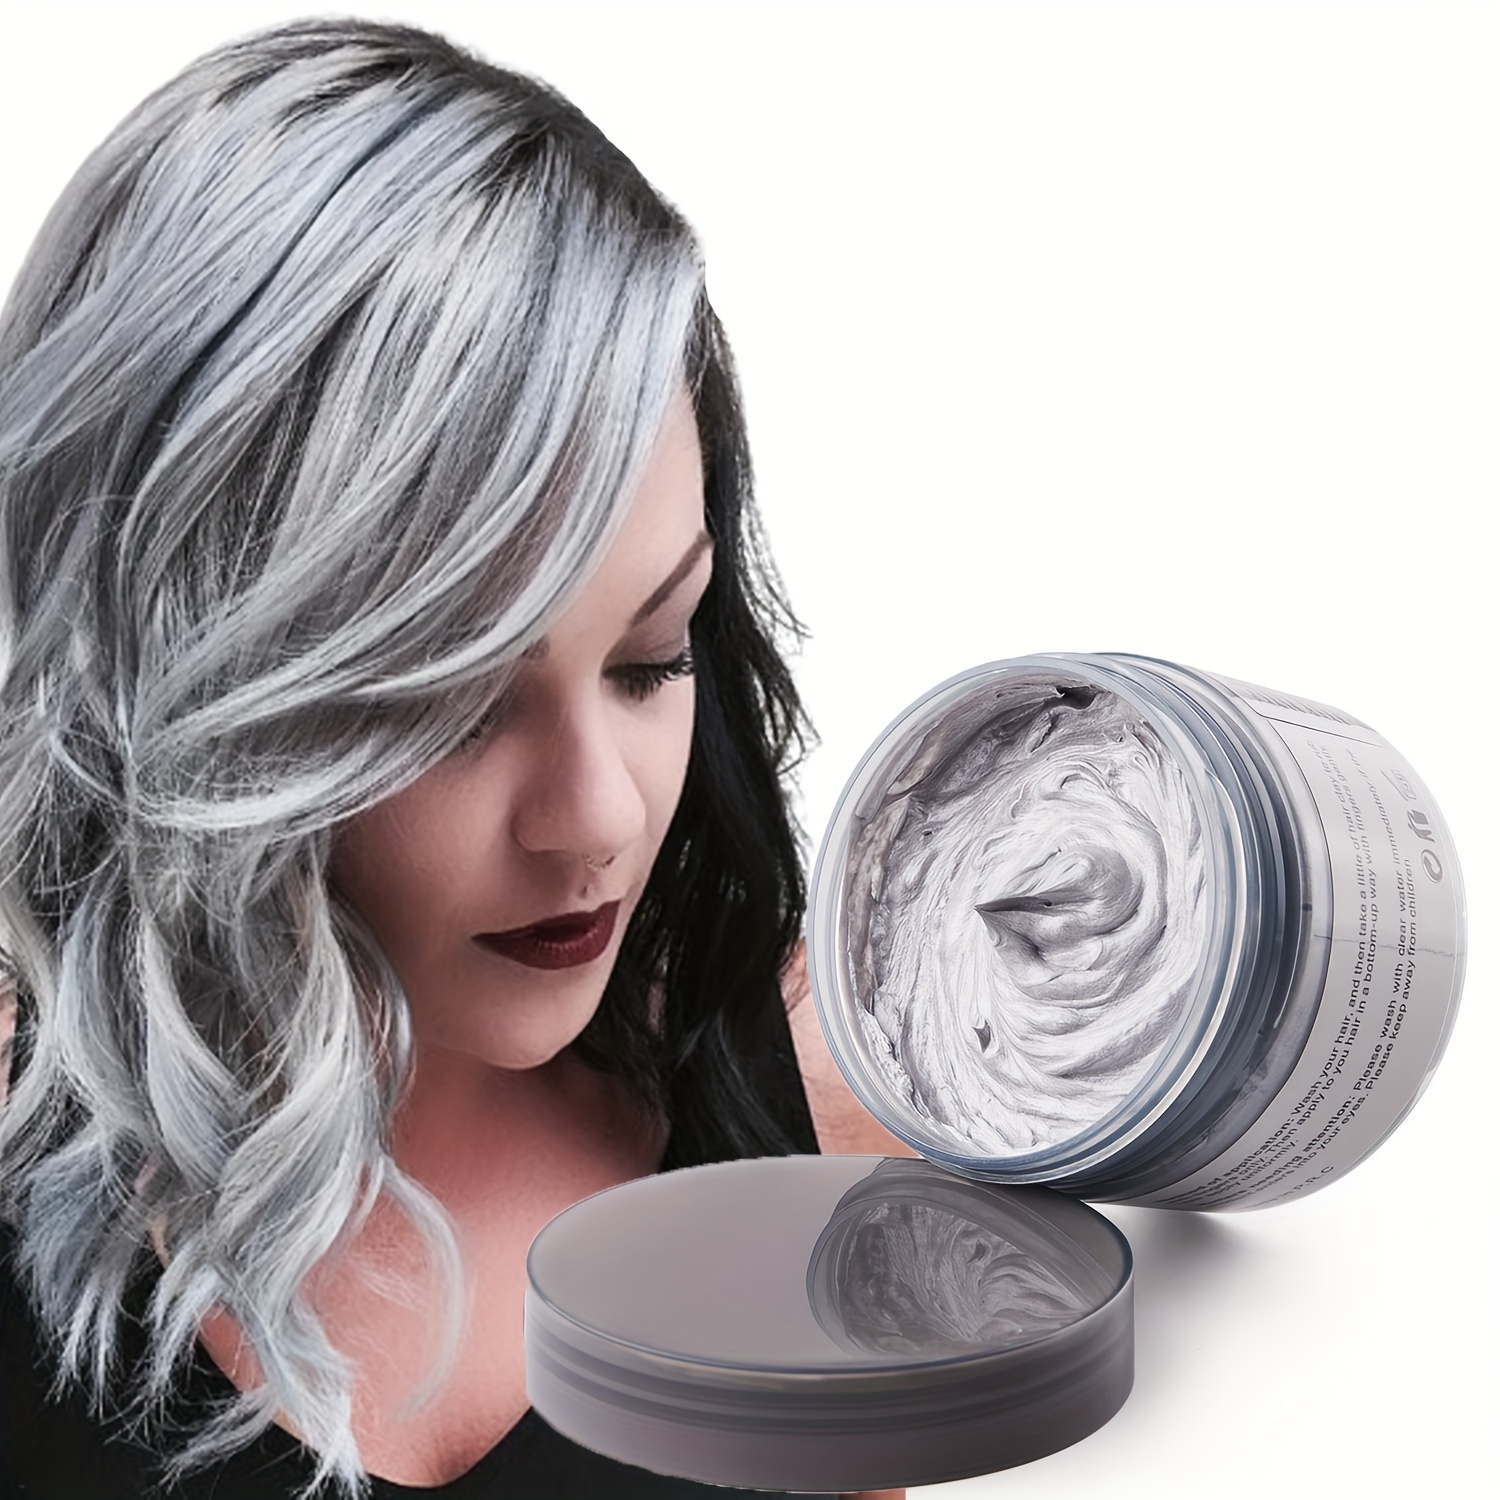 Mofajang Color Hair Wax Dye Styling Pomade Silver Grandma Grey Disposable  Natural Hair Strong Gel Cream Hair Dye For Women Men - Hair Color -  AliExpress